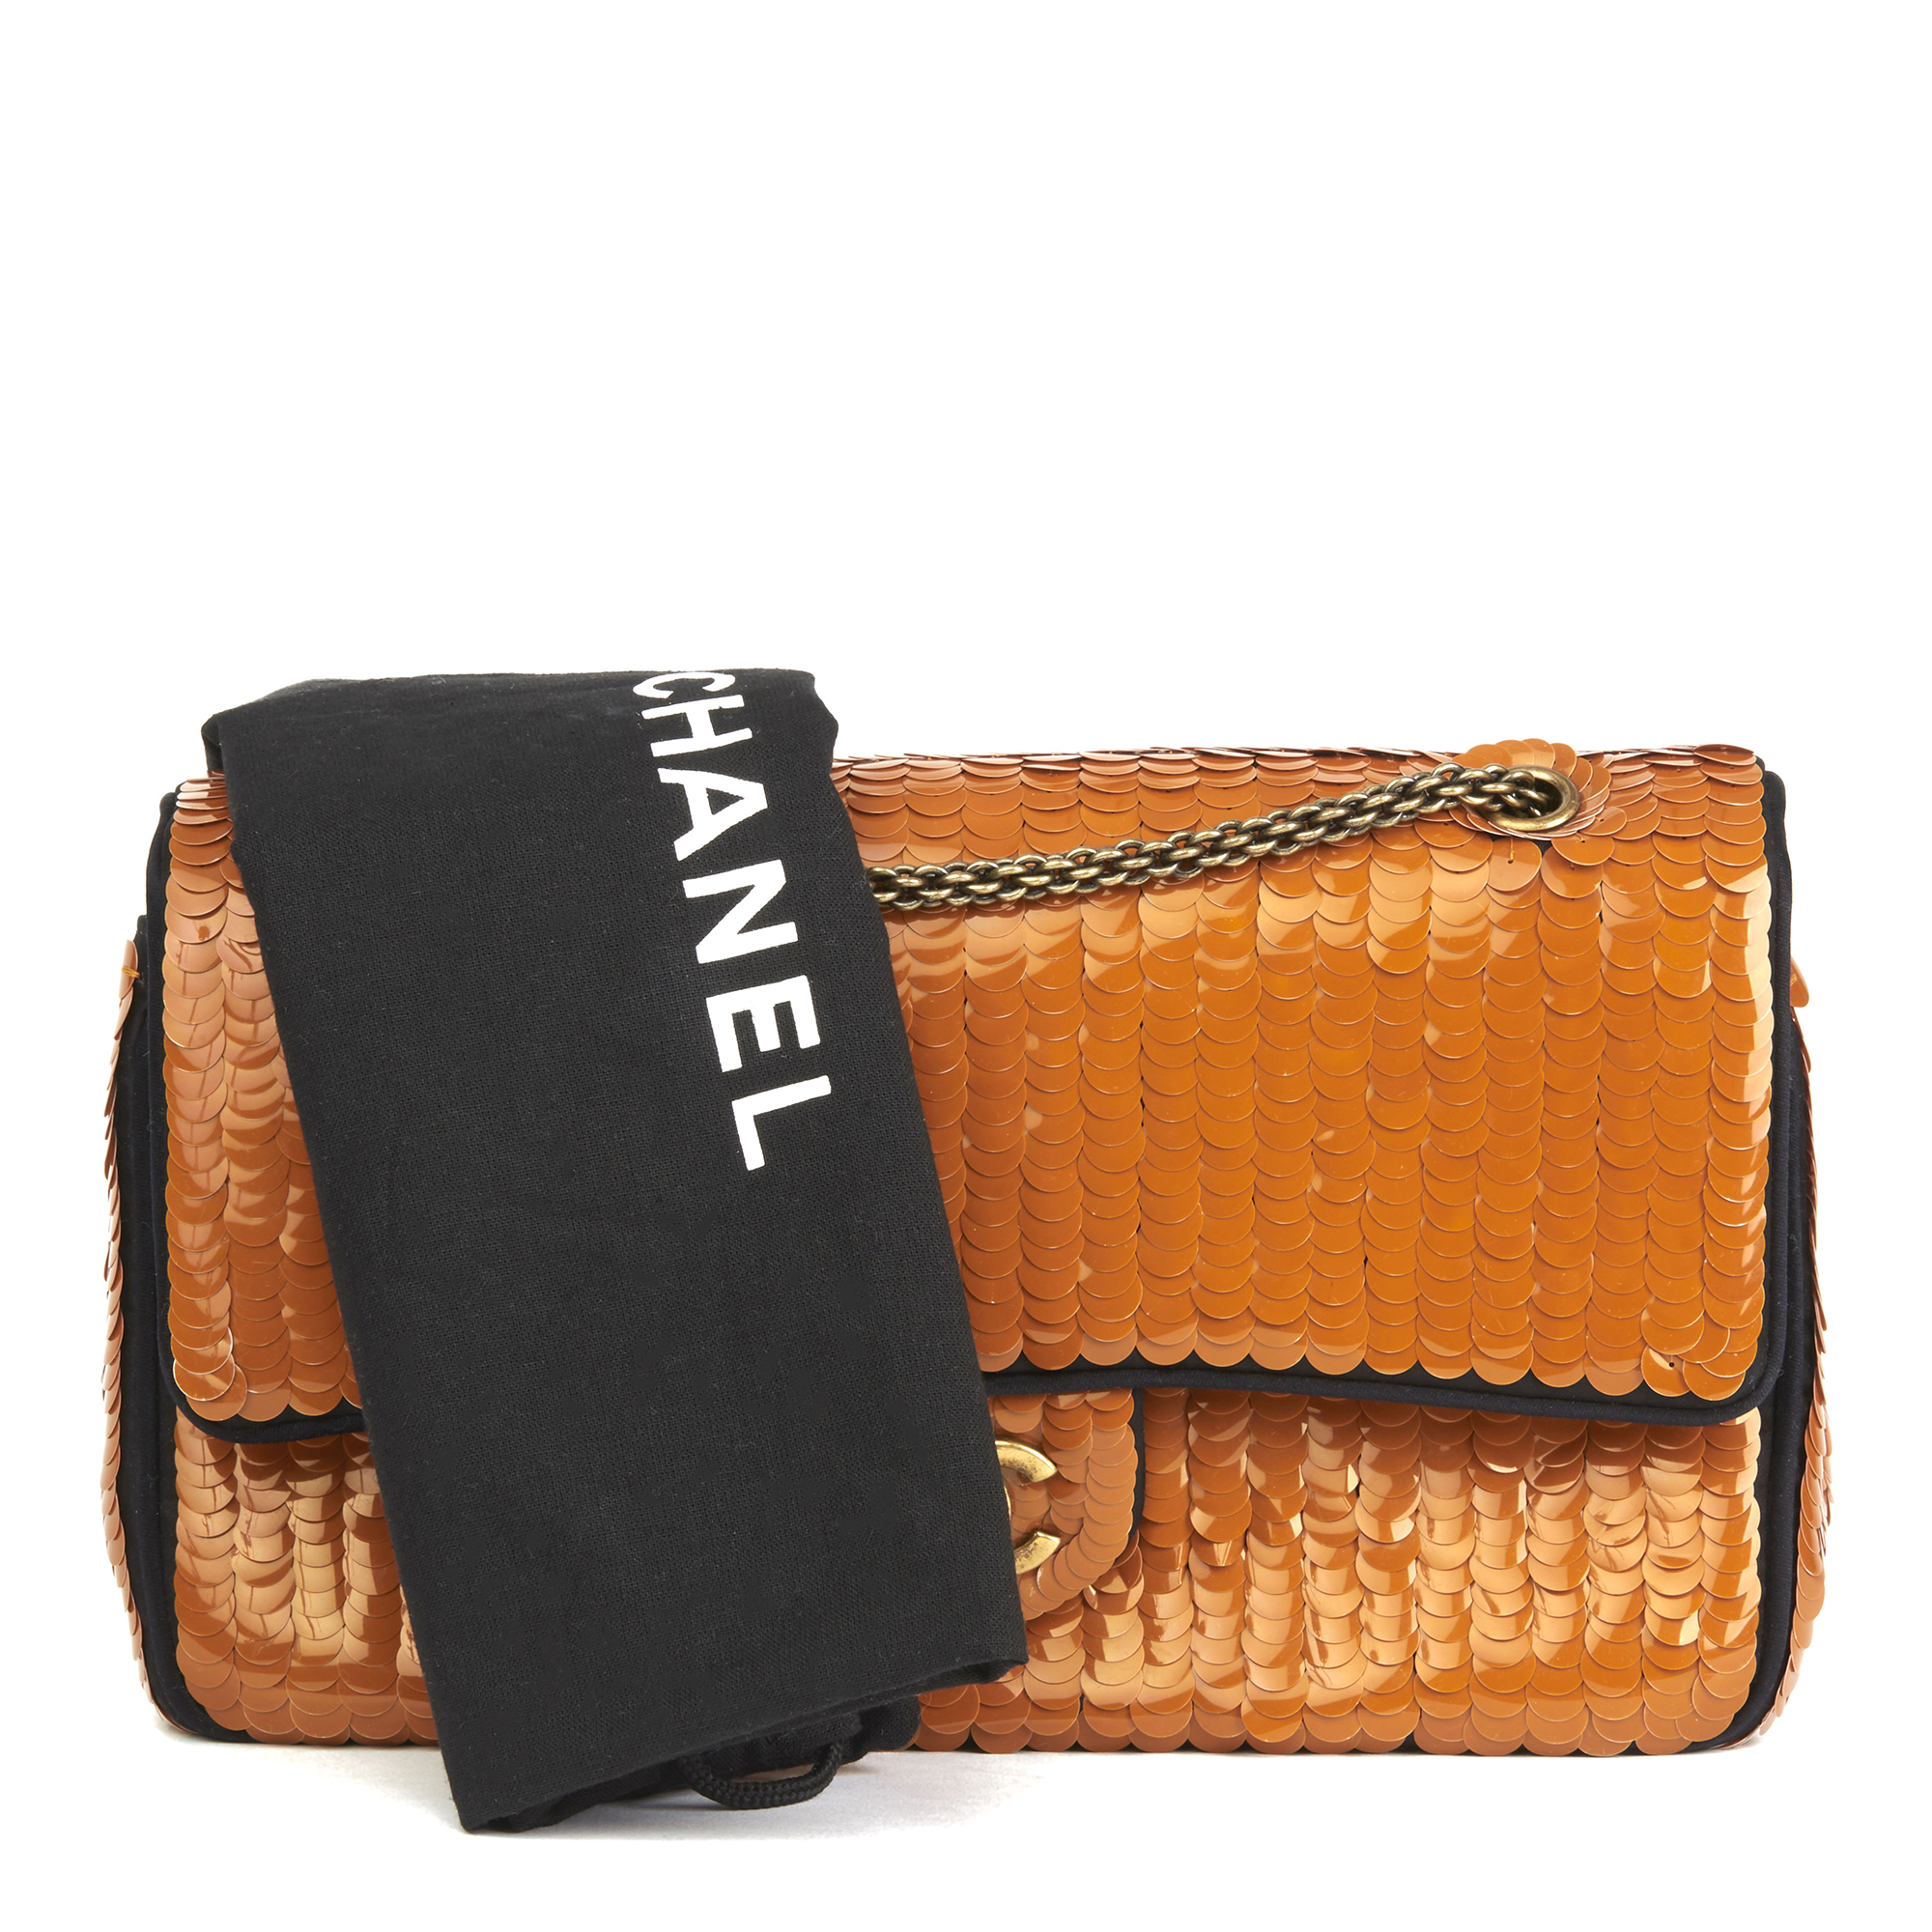 Chanel Medium Classic Double Flap Bag - Image 3 of 10